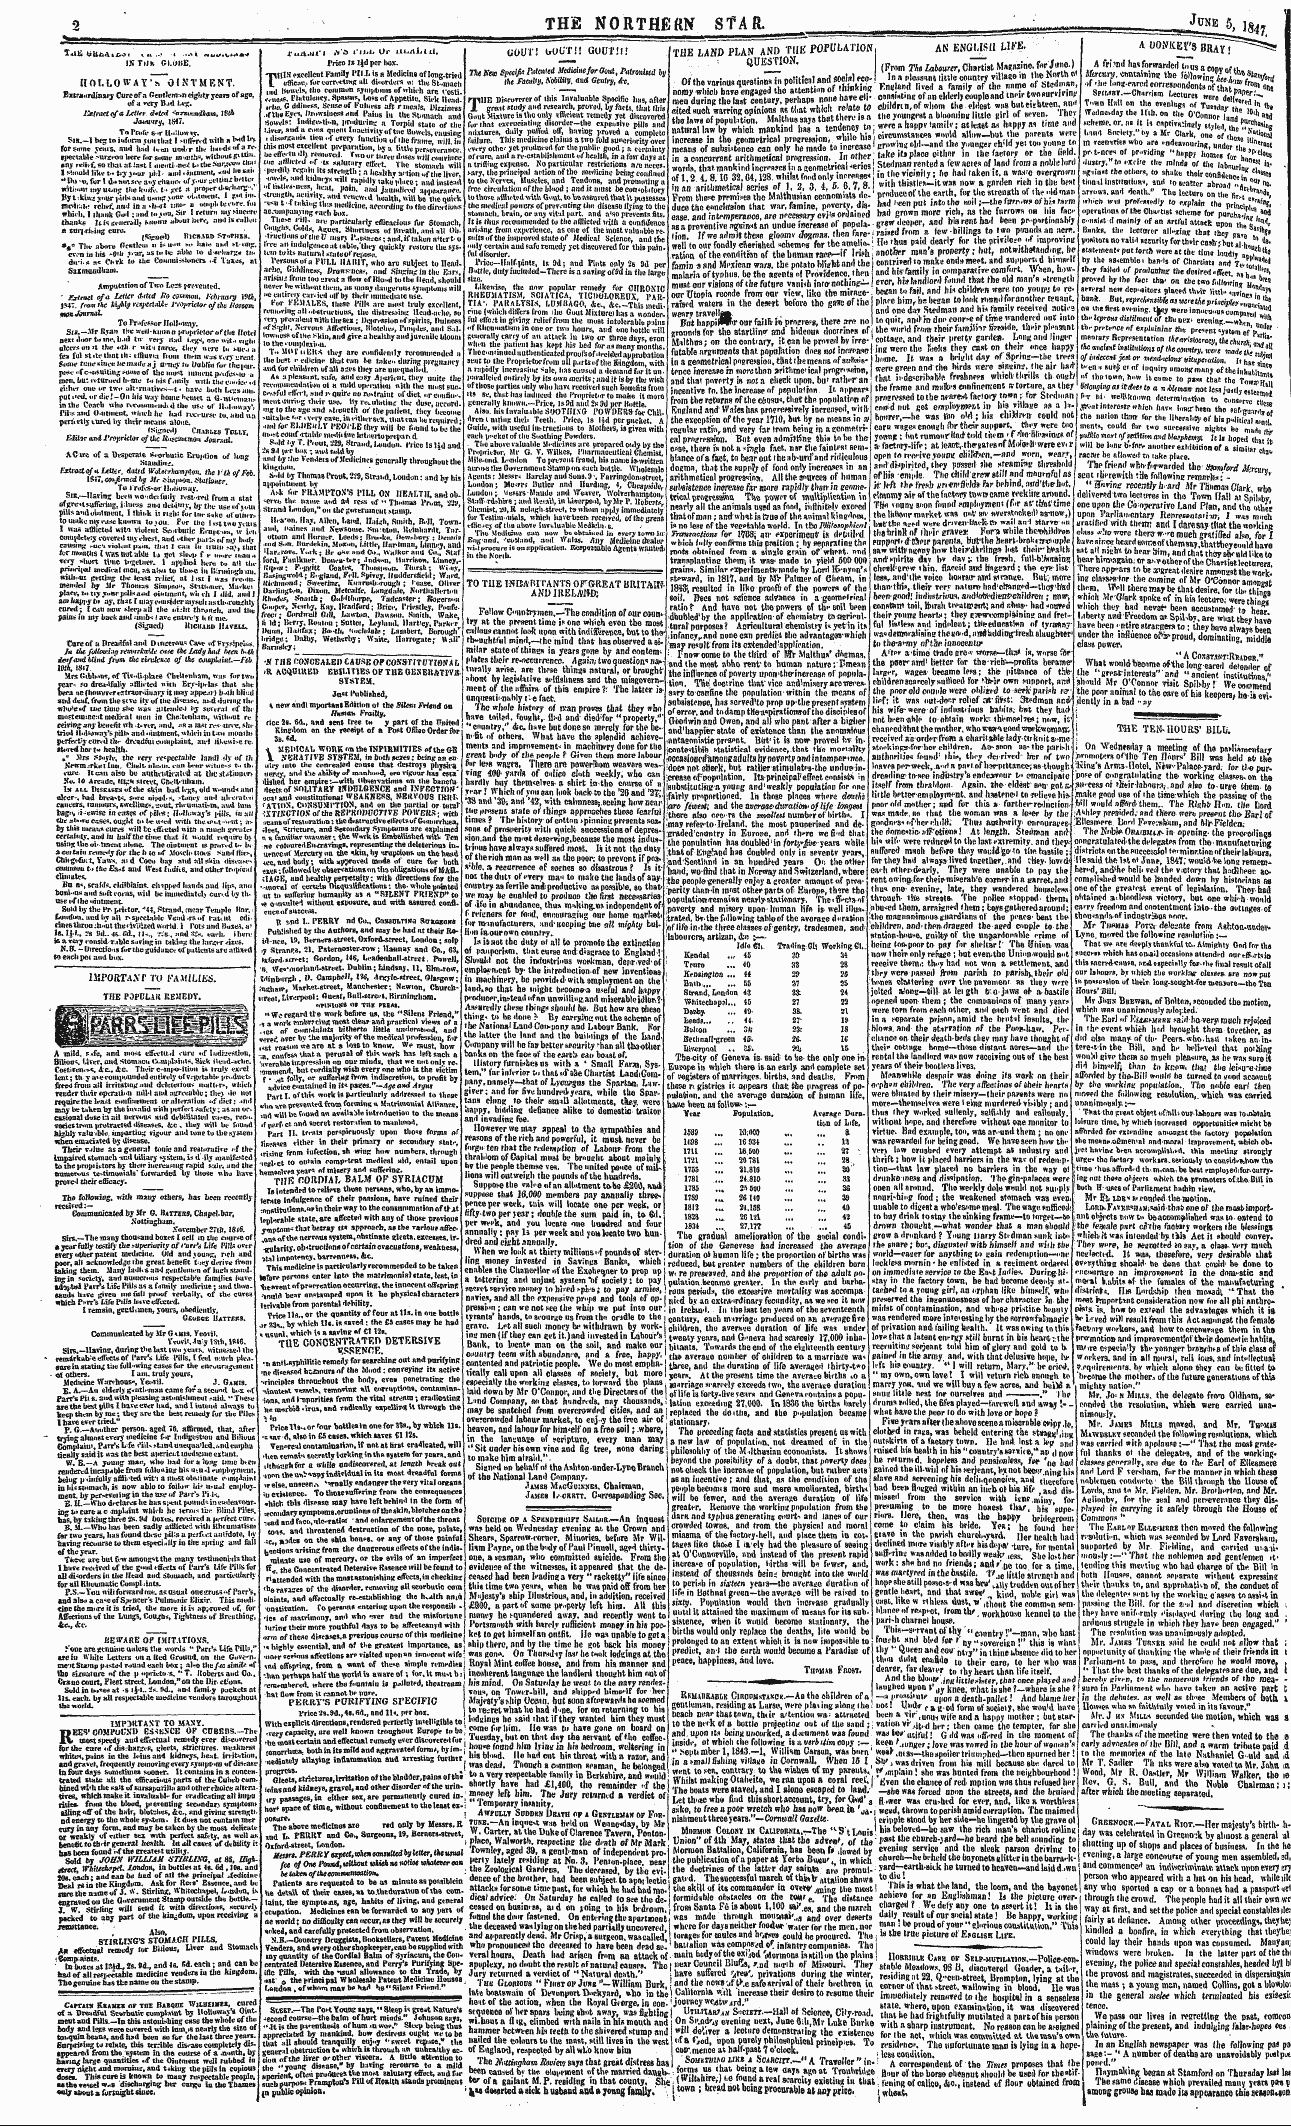 Northern Star (1837-1852): jS F Y, 3rd edition - Ad00219